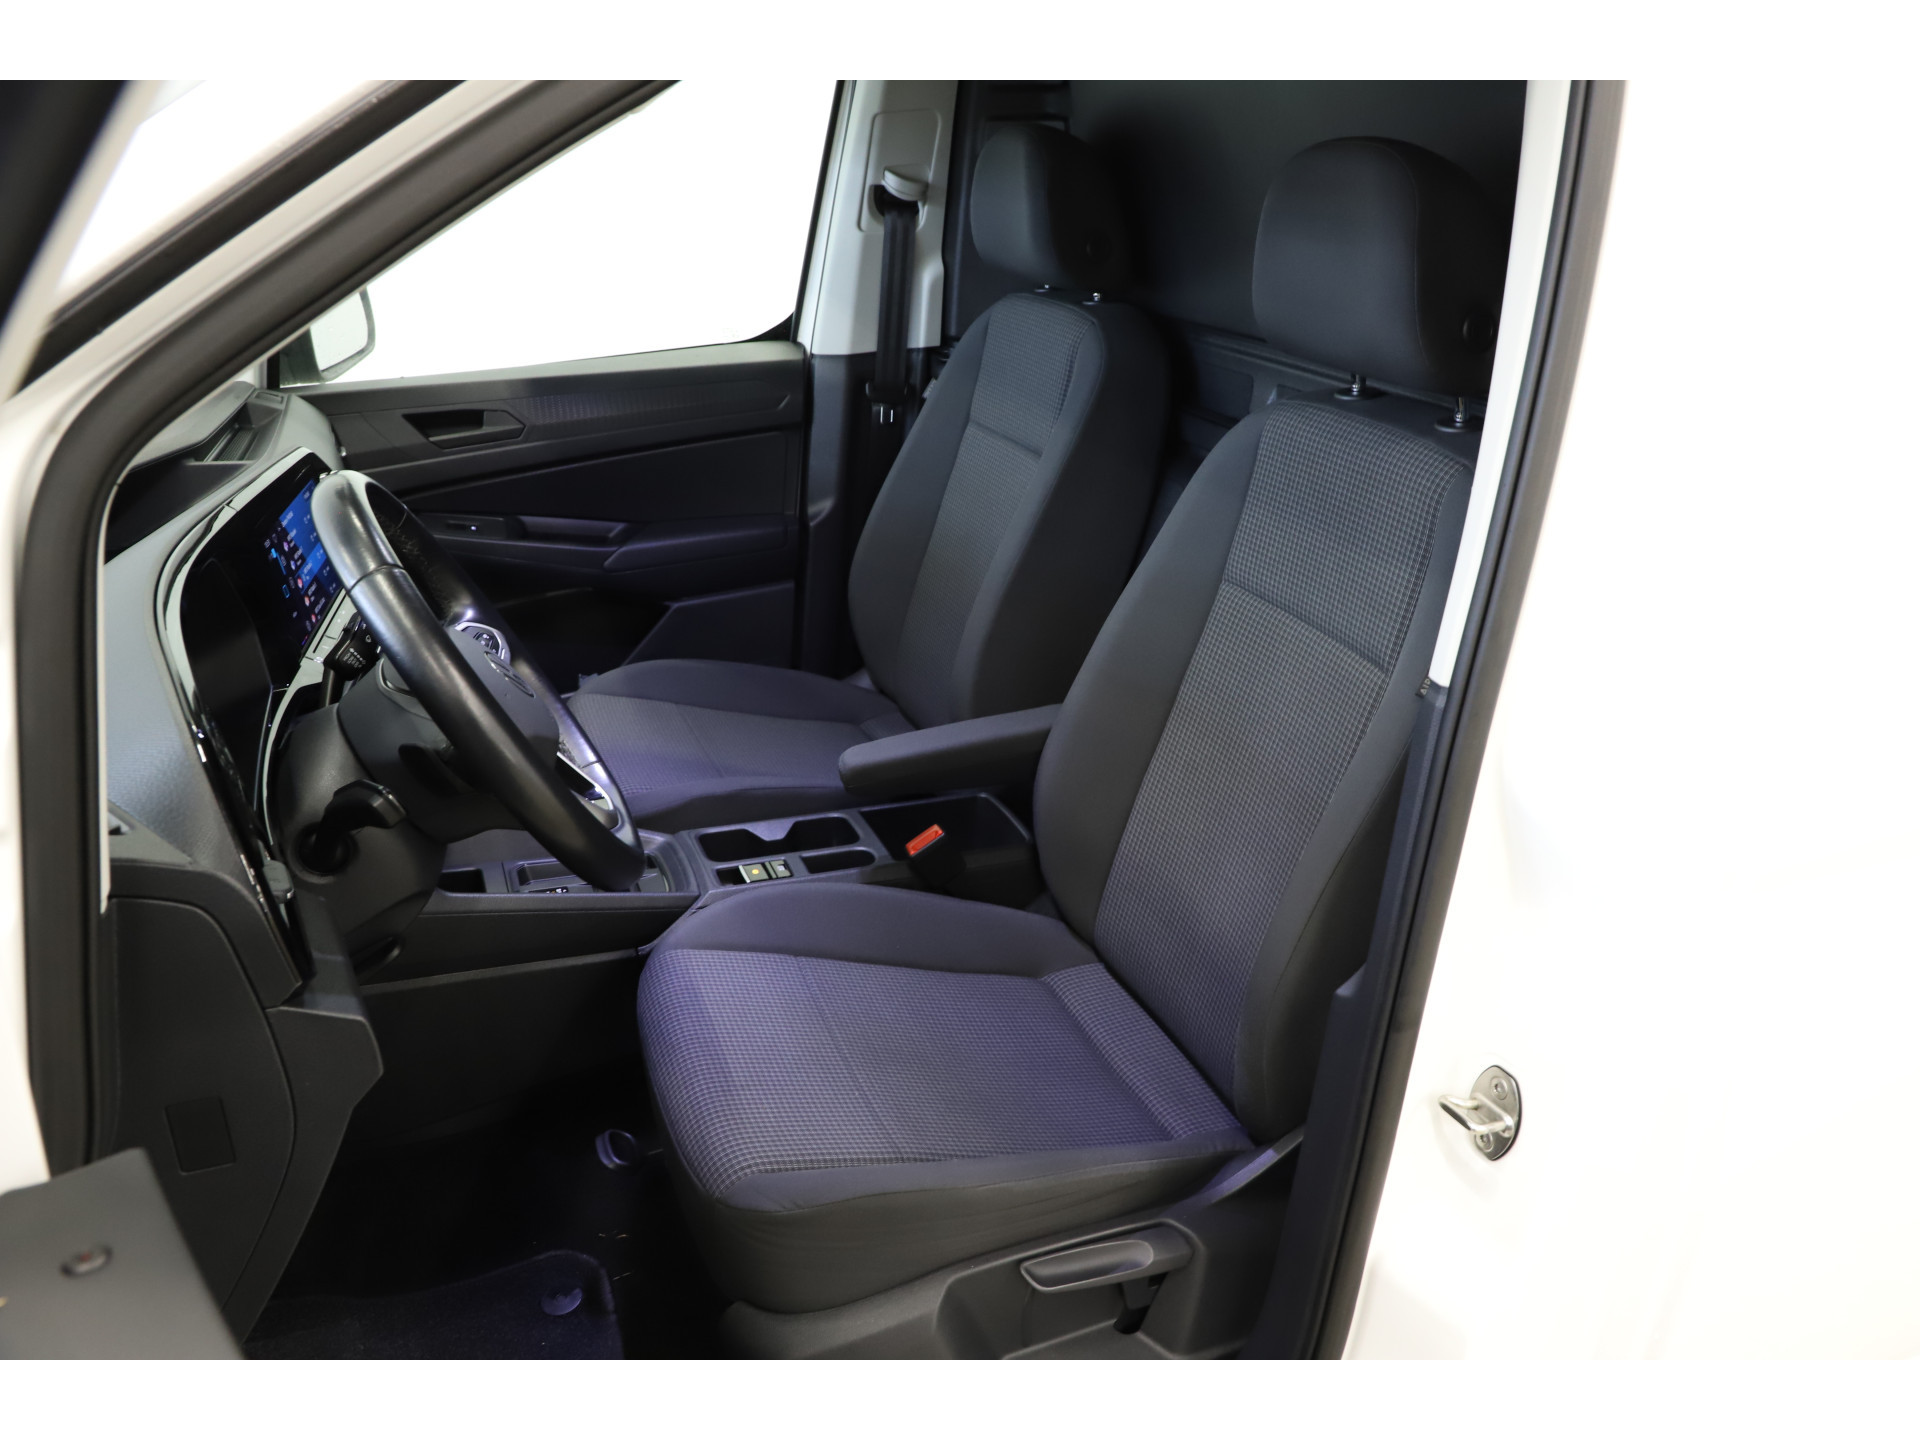 Volkswagen - Caddy Cargo 2.0 TDI 122pk DSG 1st Edition - 2021